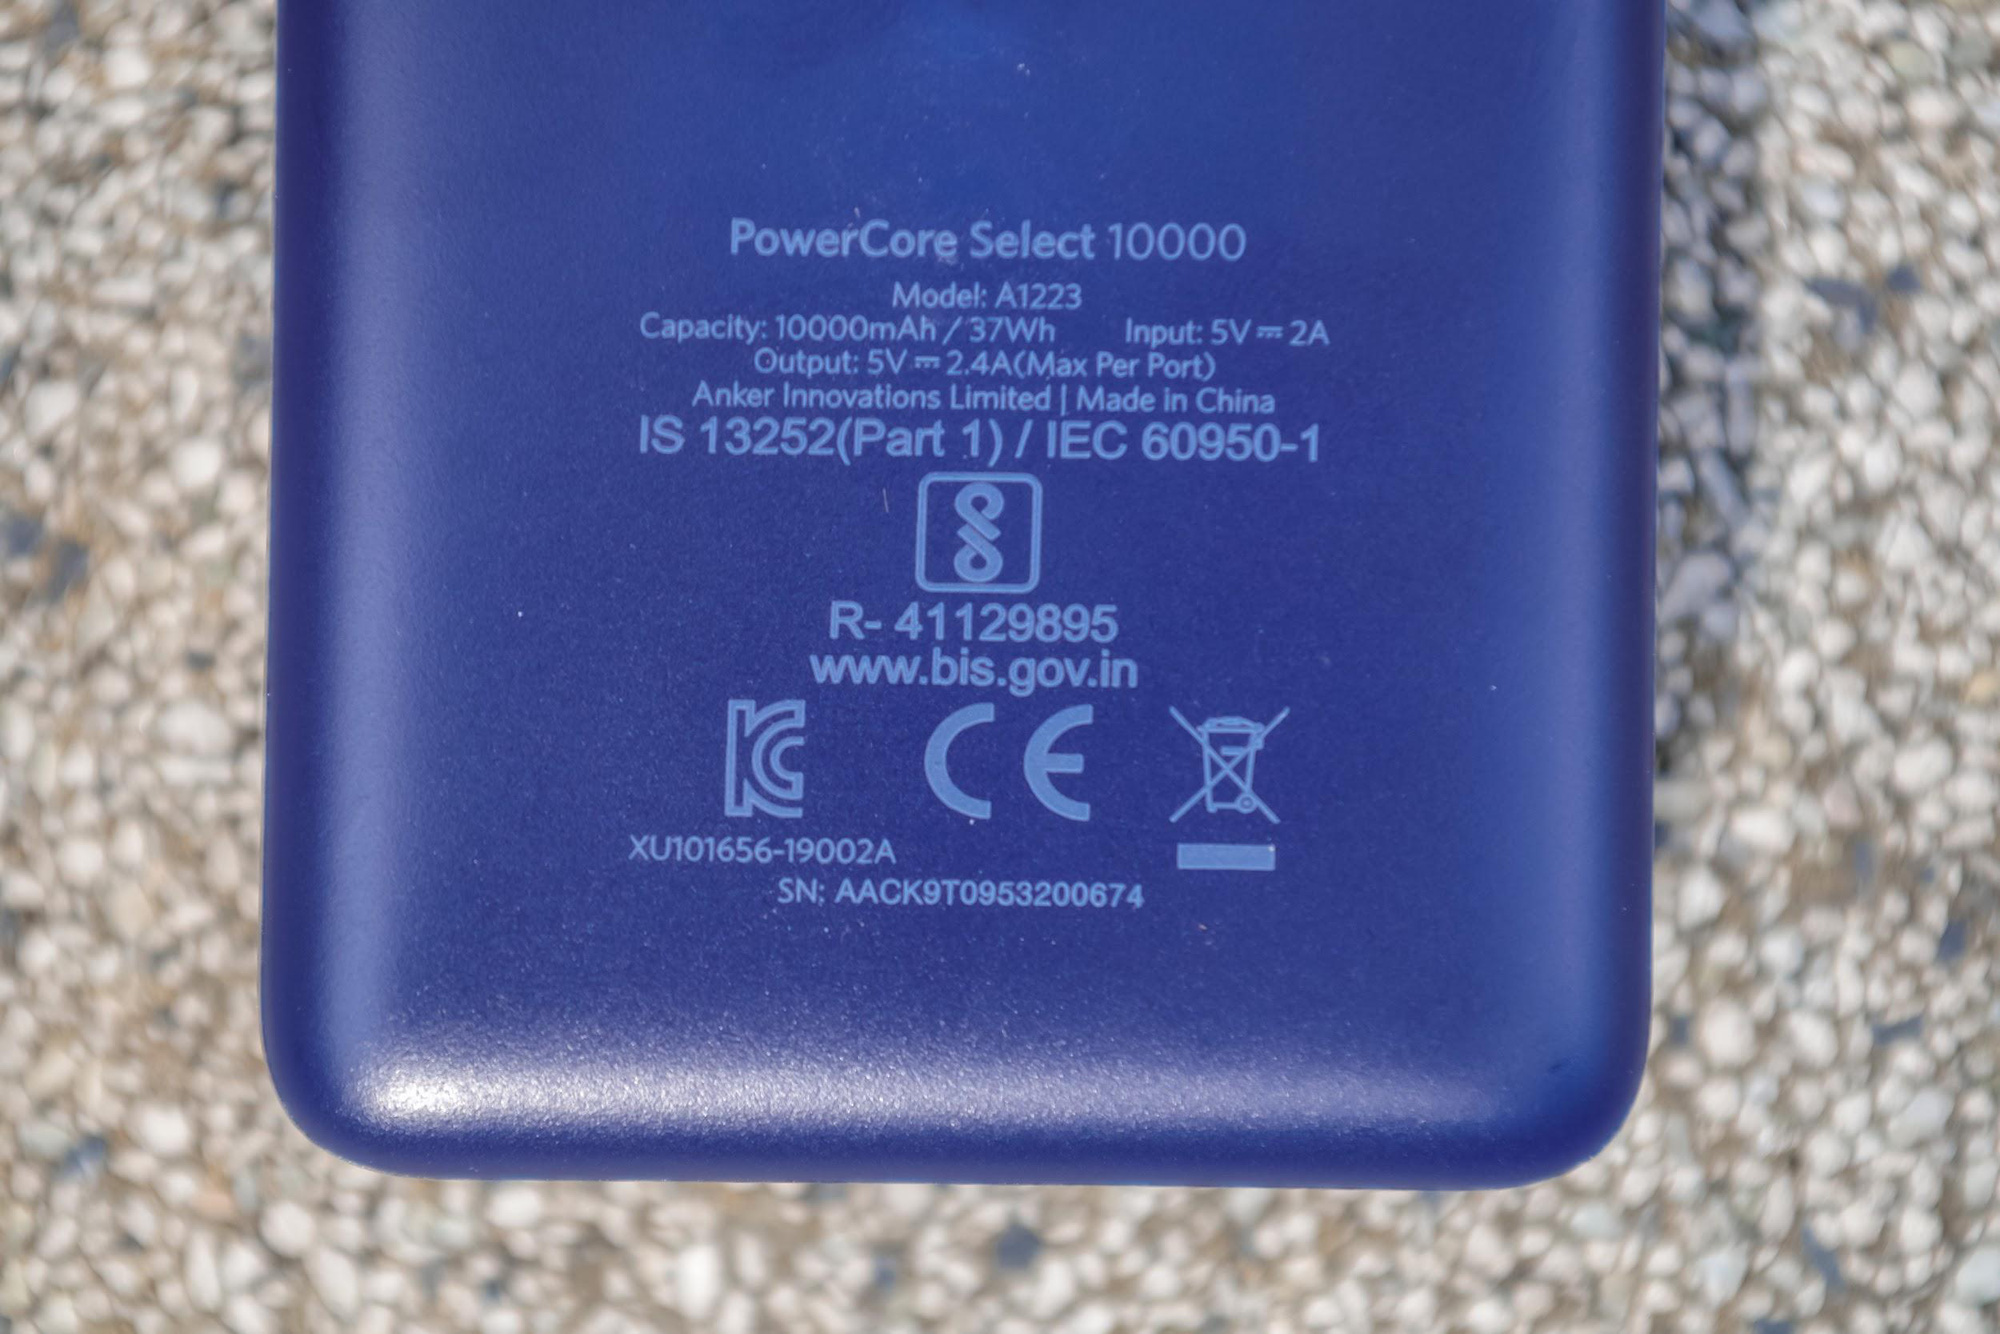 PowerCore Select 10000: Pin dự phòng giá học sinh! - Ảnh 5.